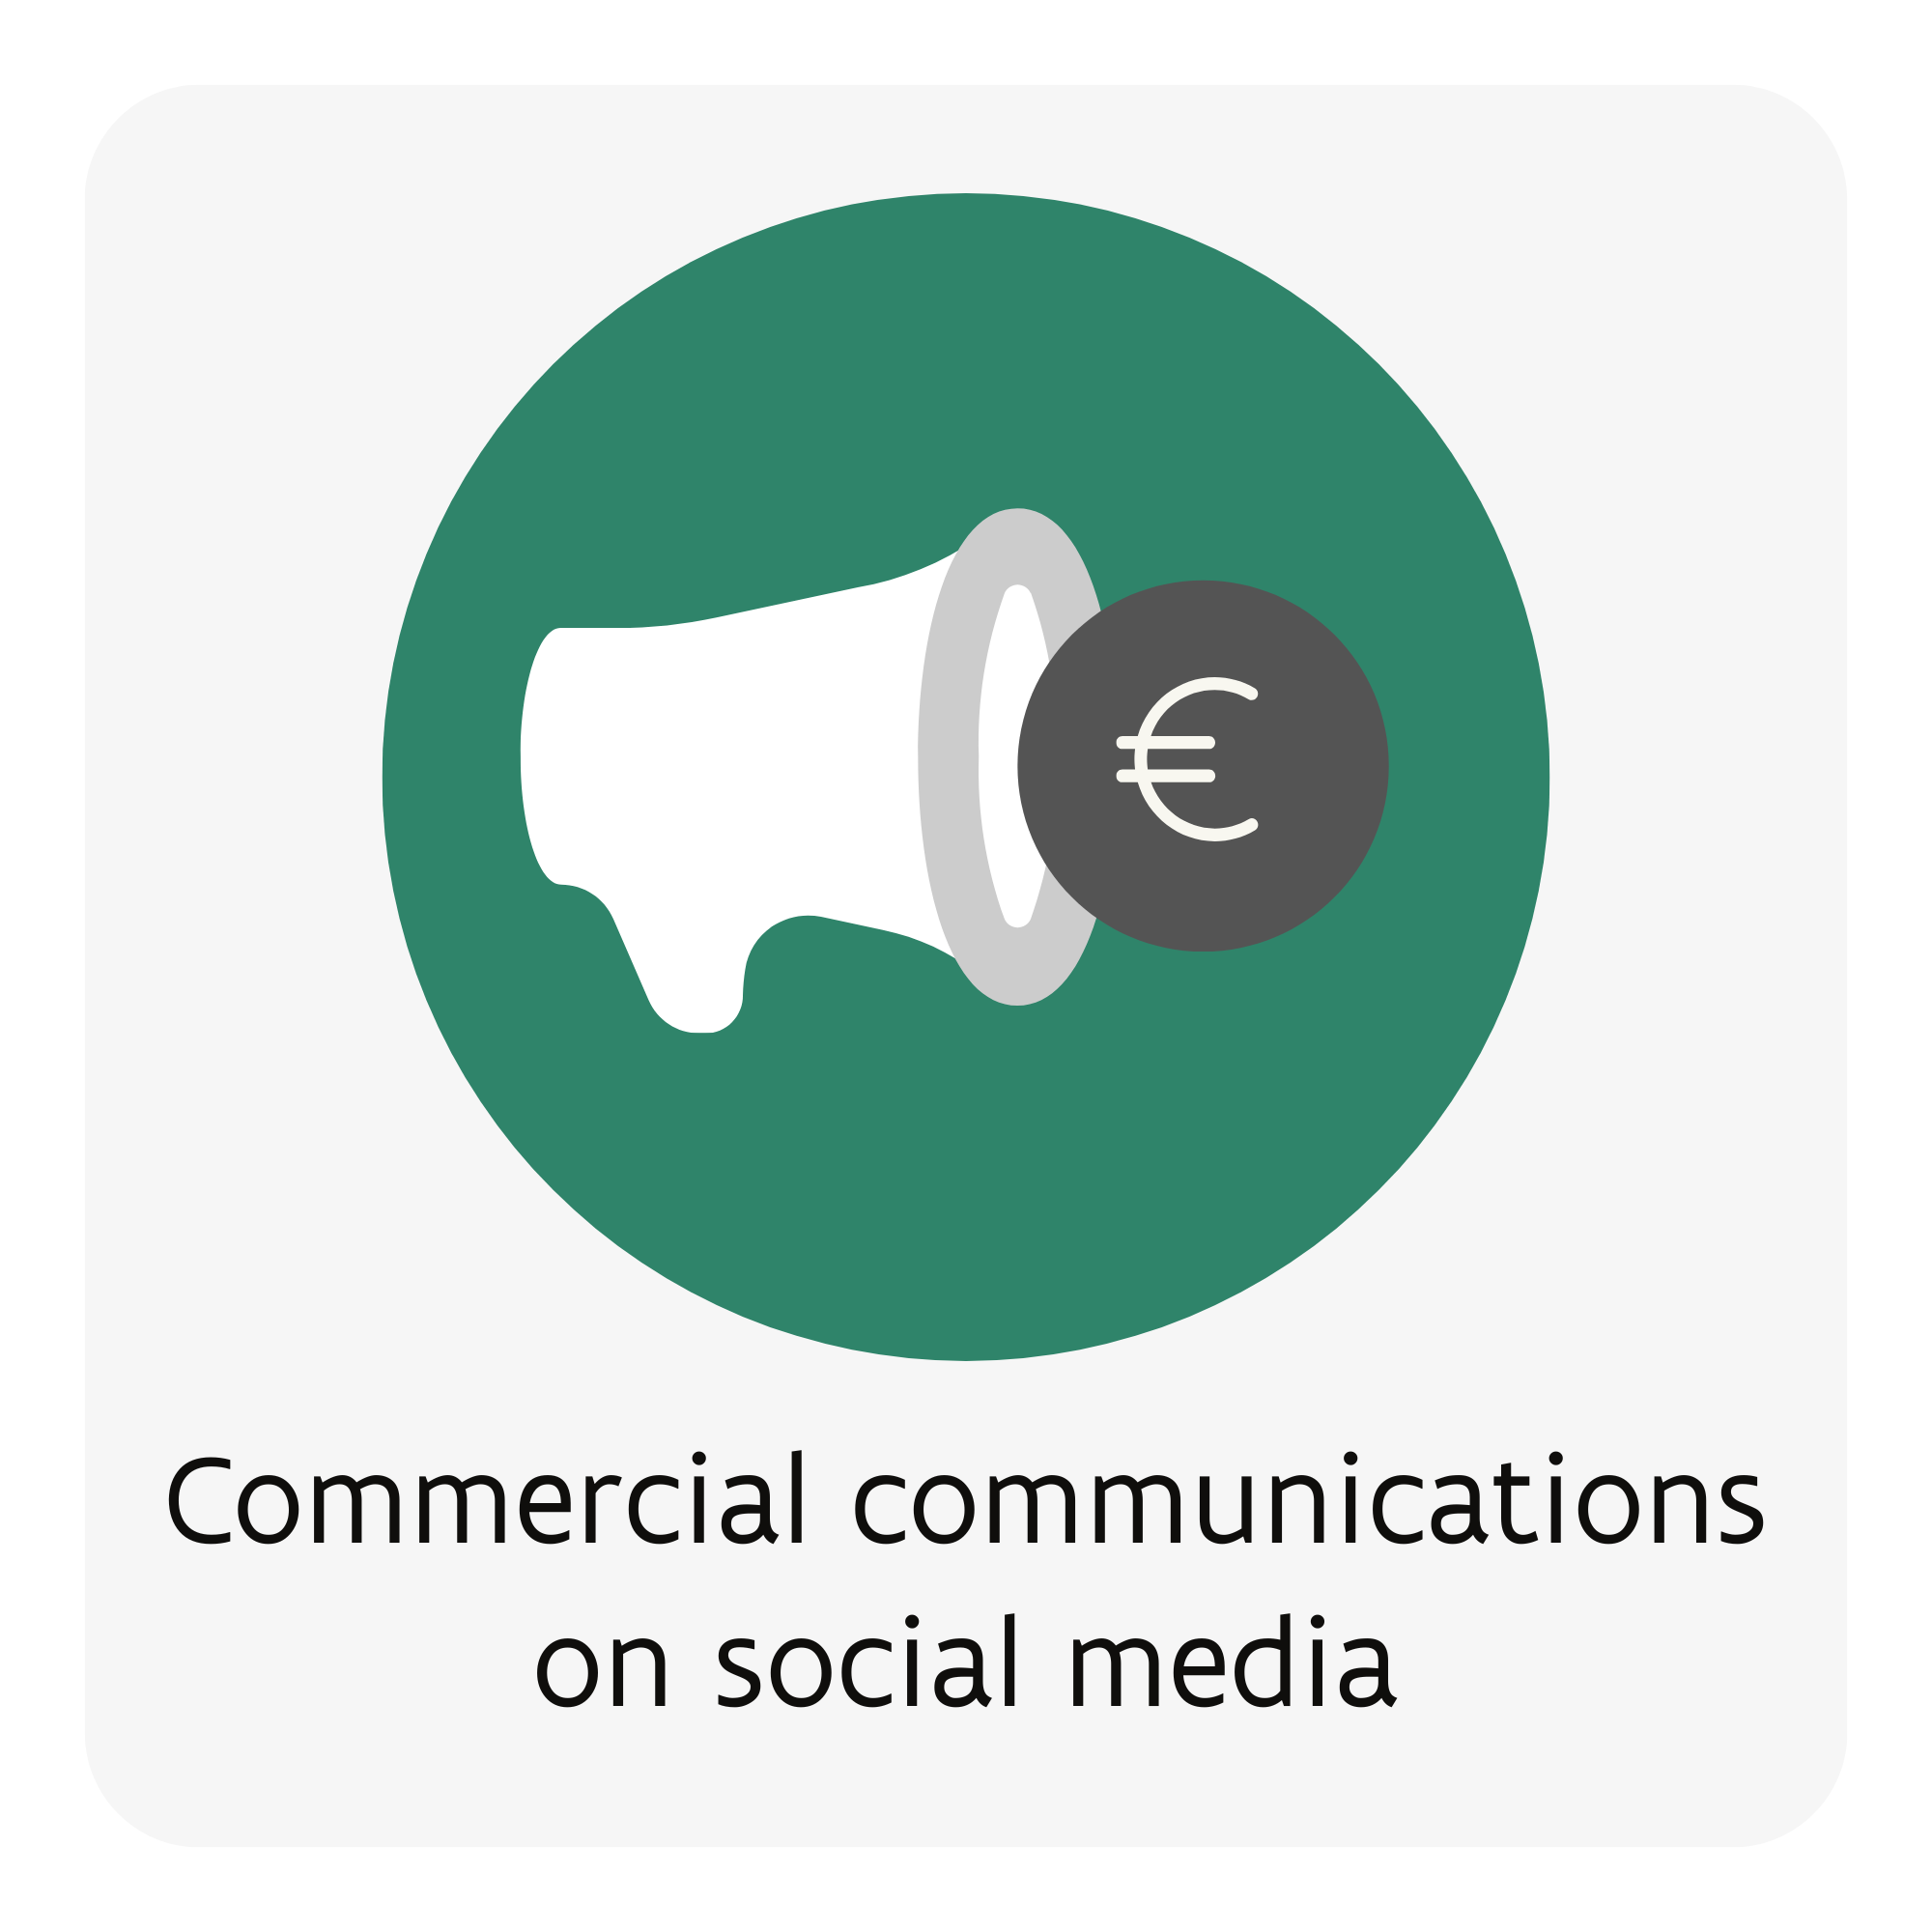 Commercial communications on social media